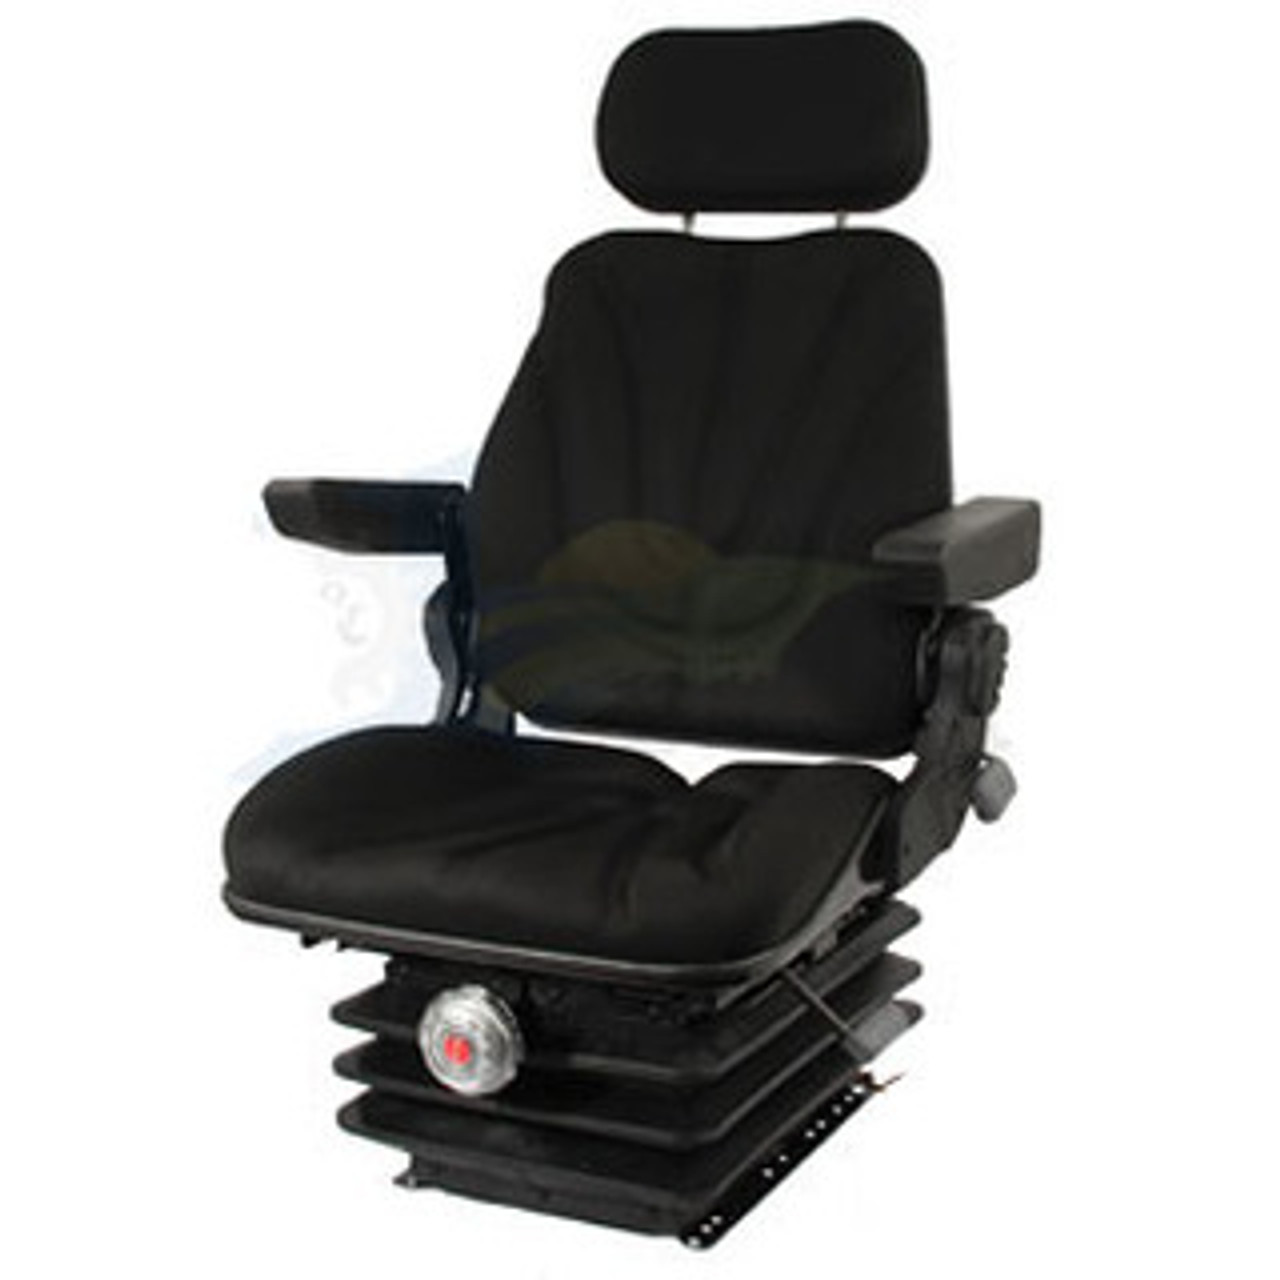 White/Oliver/MPL/Moline Tractor Seat A-F10M240 F10 Series, Mechanical Suspension / Armrest / Headrest / Black Cloth